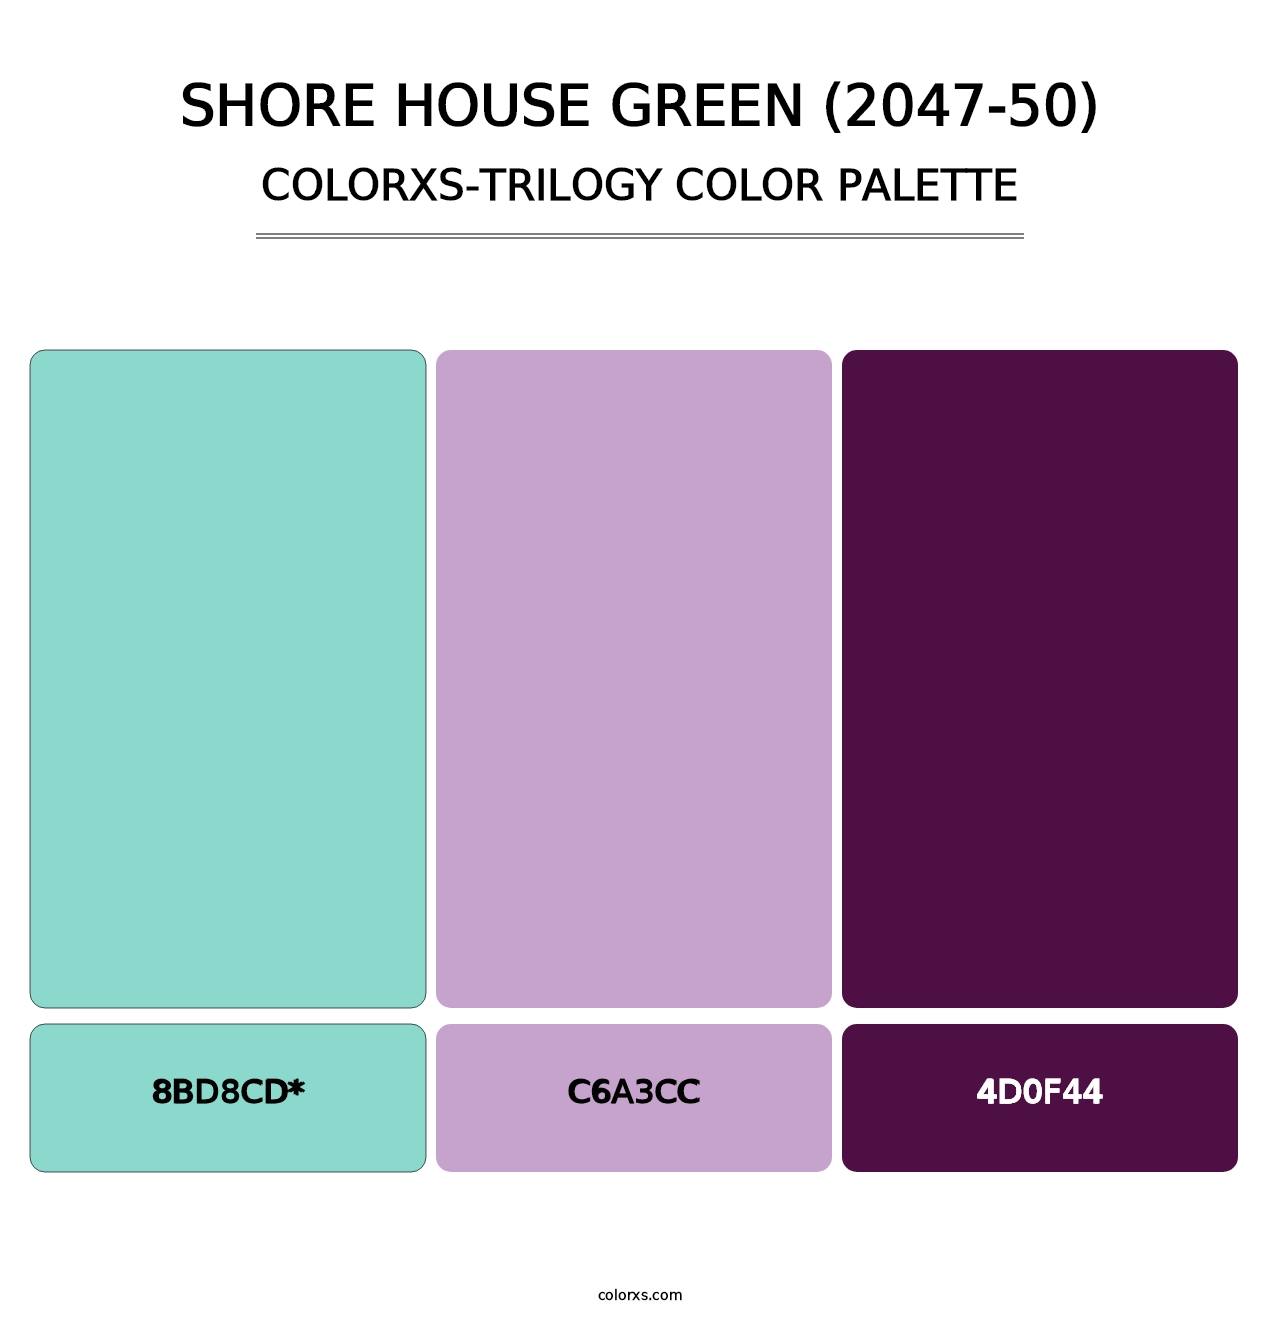 Shore House Green (2047-50) - Colorxs Trilogy Palette